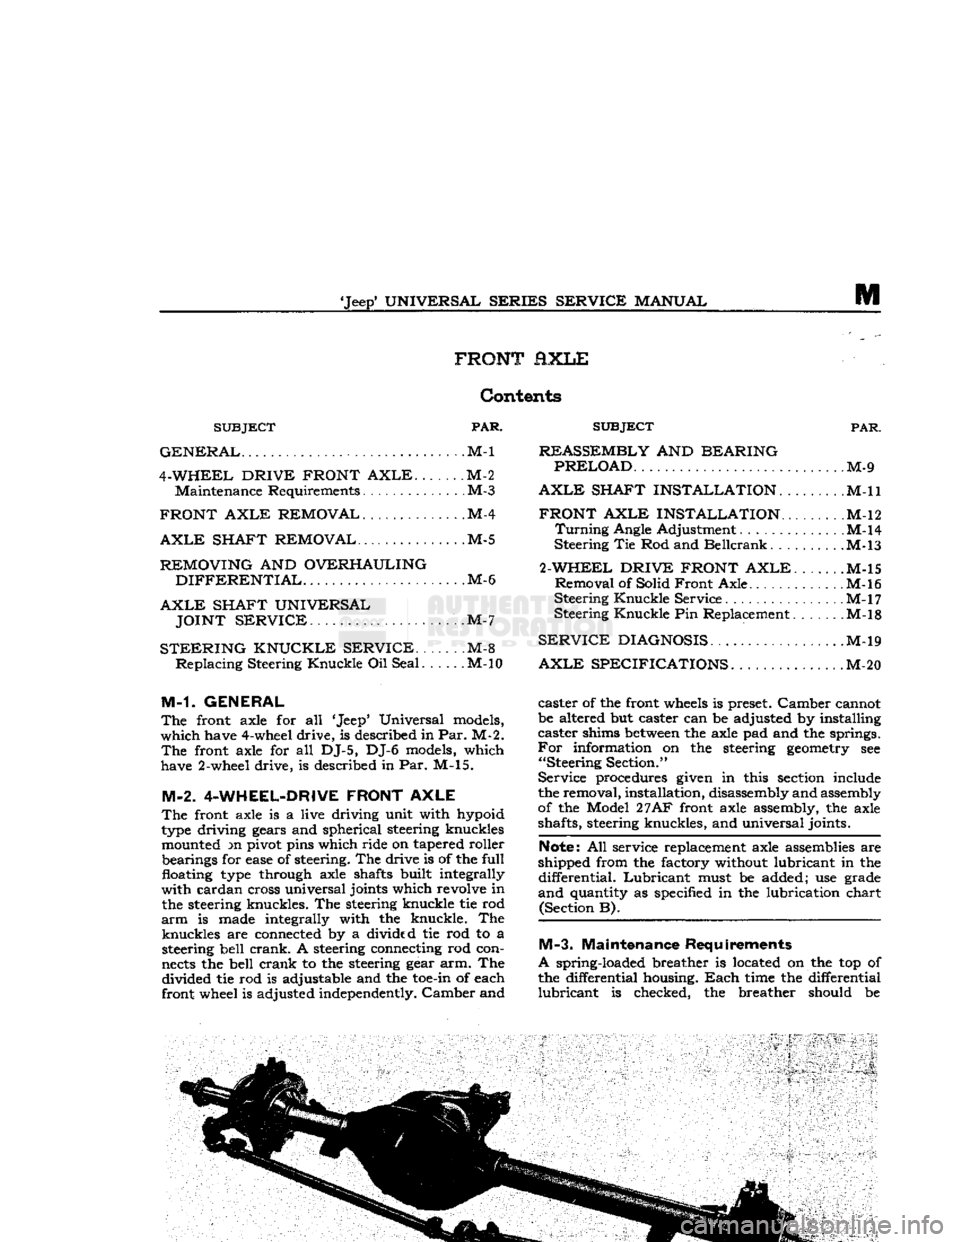 JEEP DJ 1953  Service Manual 
Jeep*
 UNIVERSAL SERIES SERVICE
 MANUAL 

m 
FRONT fiXLE 

Contents 

SUBJECT
 PAR. 

GENERAL.
 M-l 

4-WHEEL DRIVE FRONT
 AXLE.
 M-2 
 Maintenance
 Requirements M-3 

FRONT AXLE REMOVAL
 .M-4 

AXL